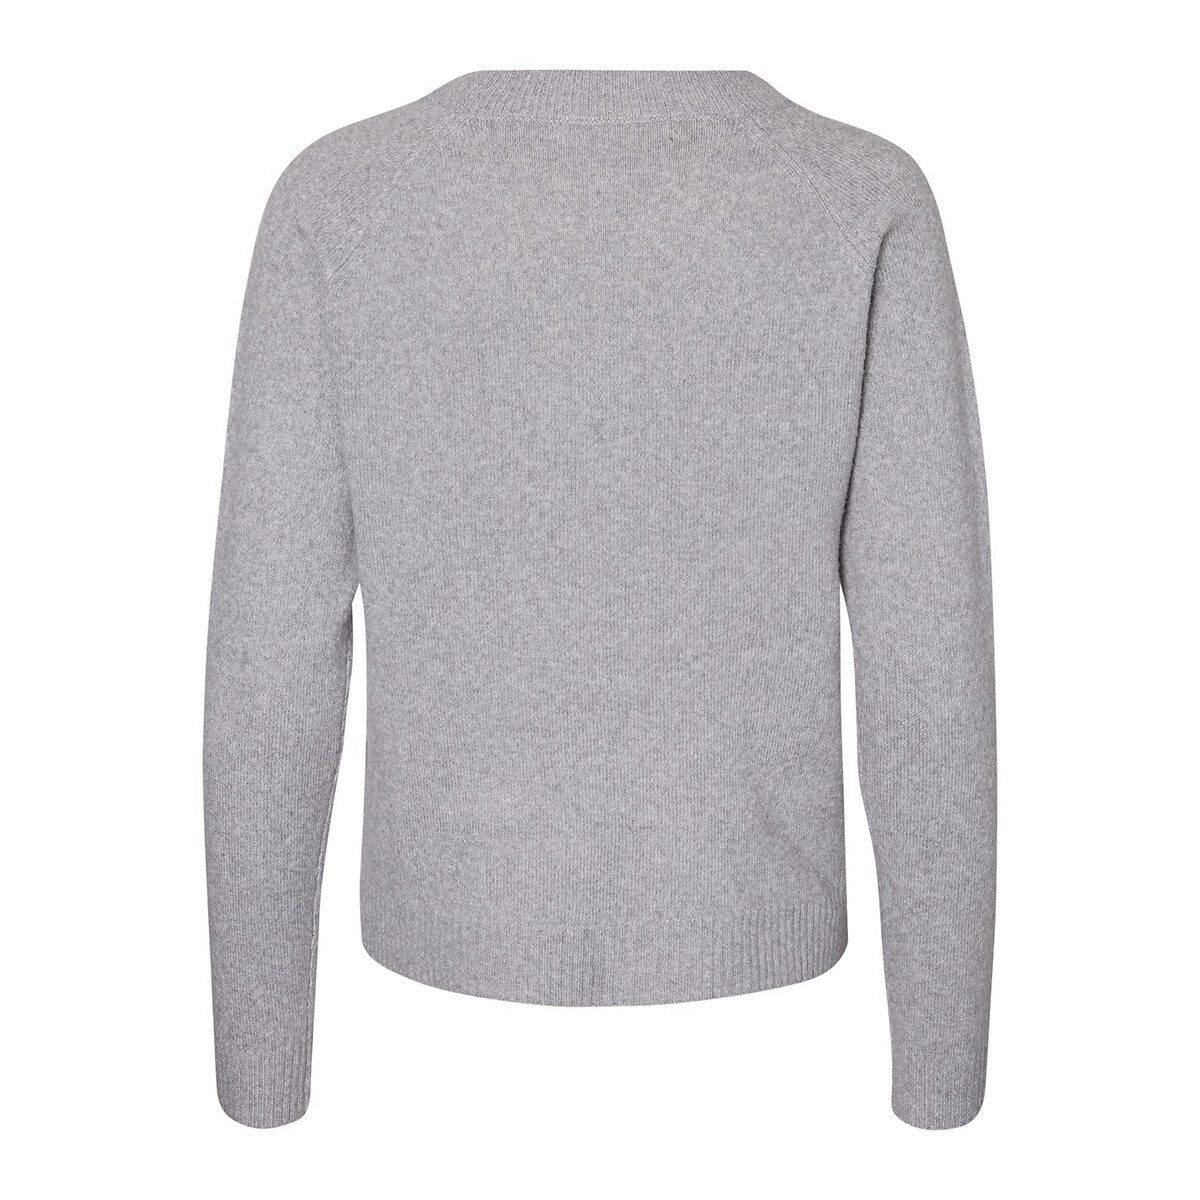 Пуловер La Redoute С круглым вырезом тонкий трикотаж XS серый, размер XS - фото 5